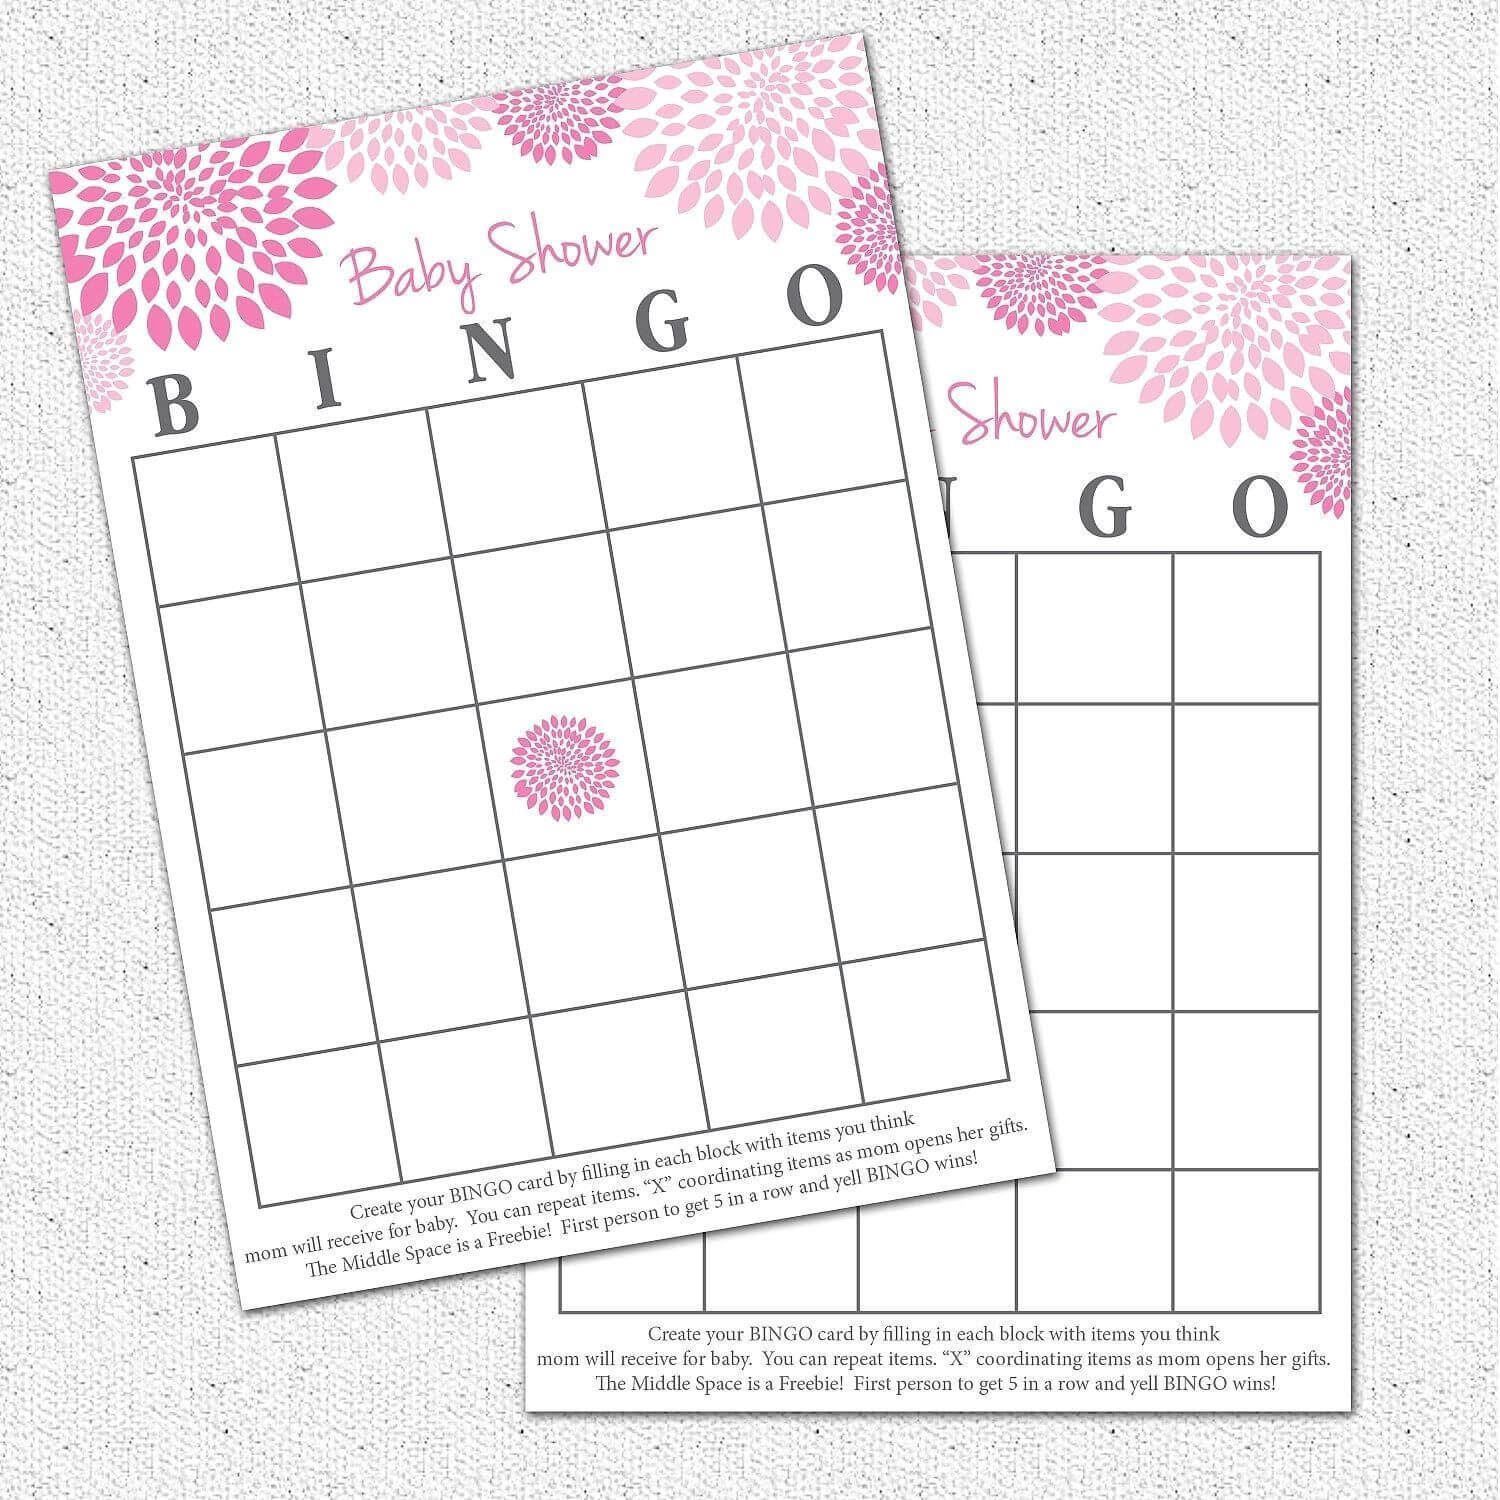 Blank Bingo Card Template Microsoft Word - Plancha In Blank Bingo Card Template Microsoft Word